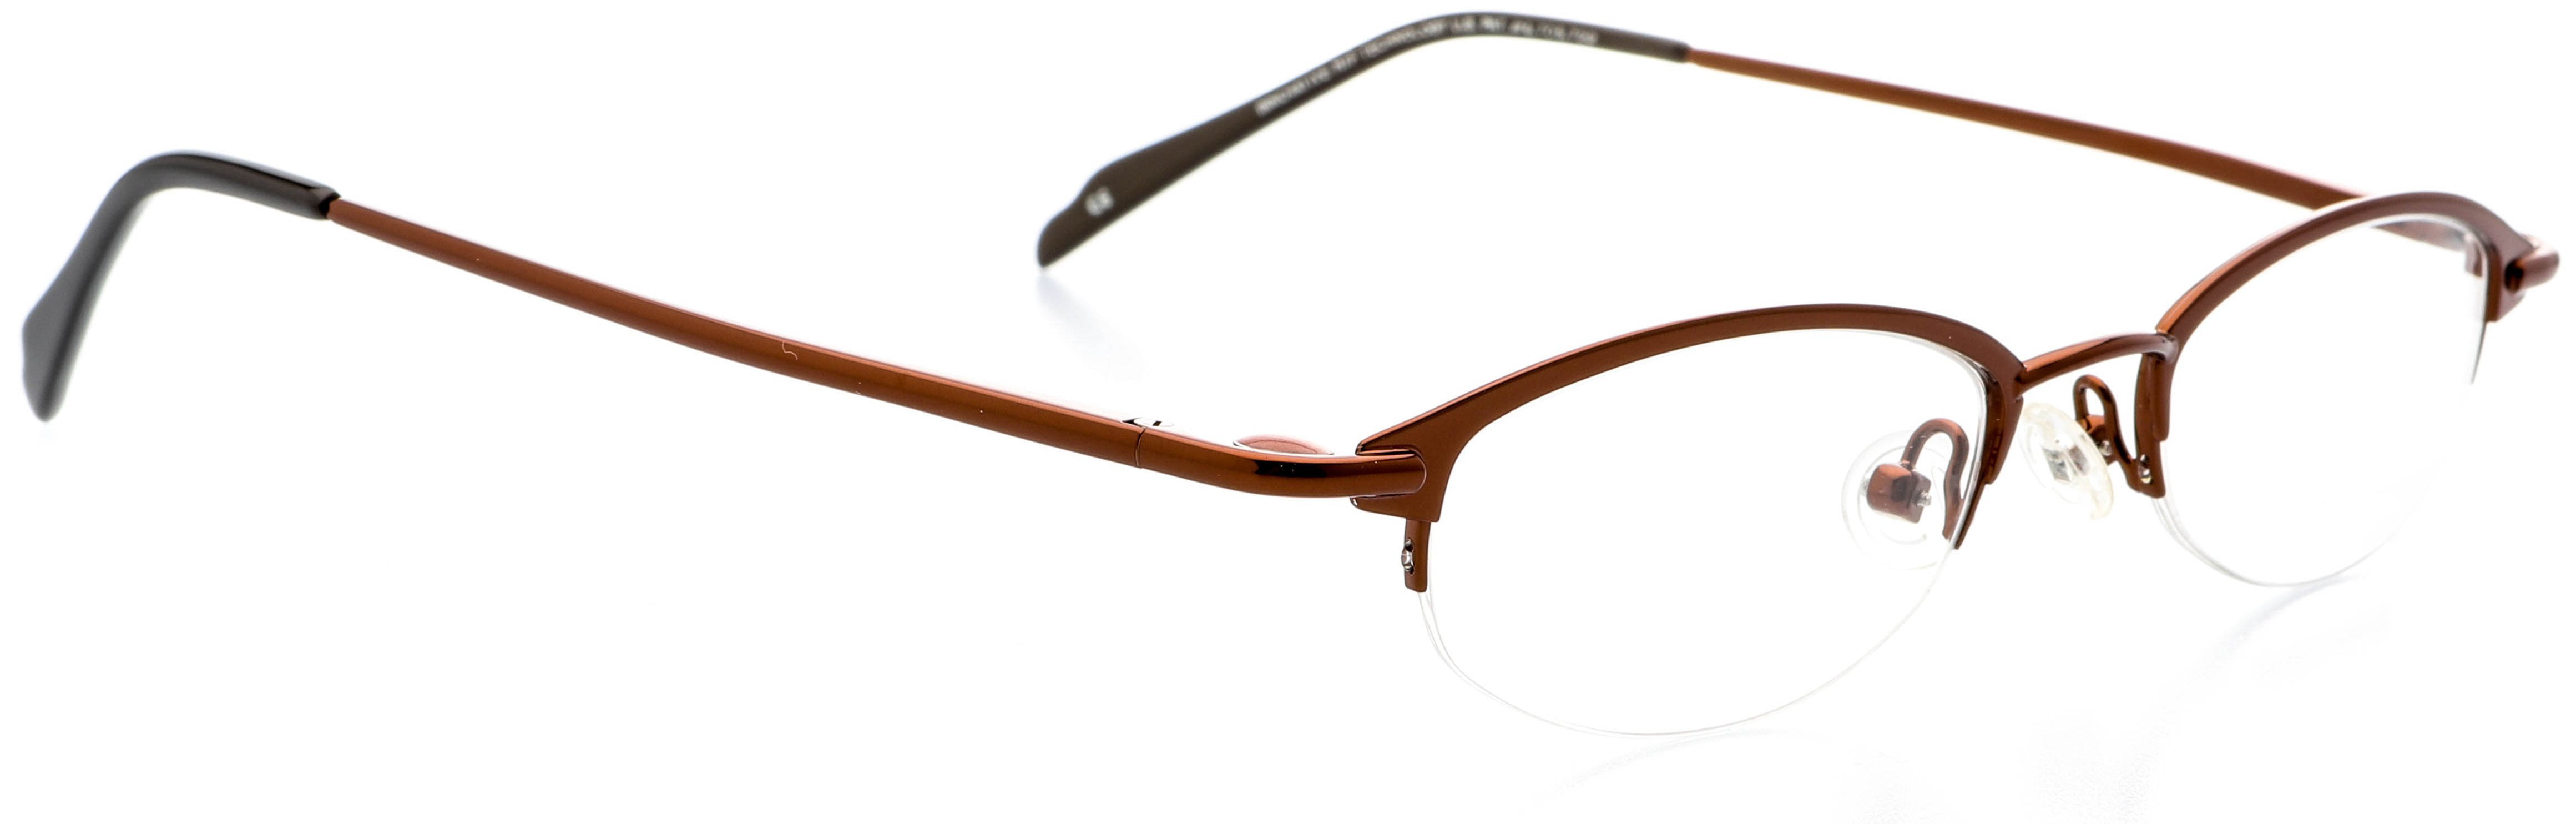 Optical Eyewear Oval Shape Metal Half Rim Frame Prescription Eyeglasses Rx Cocoa